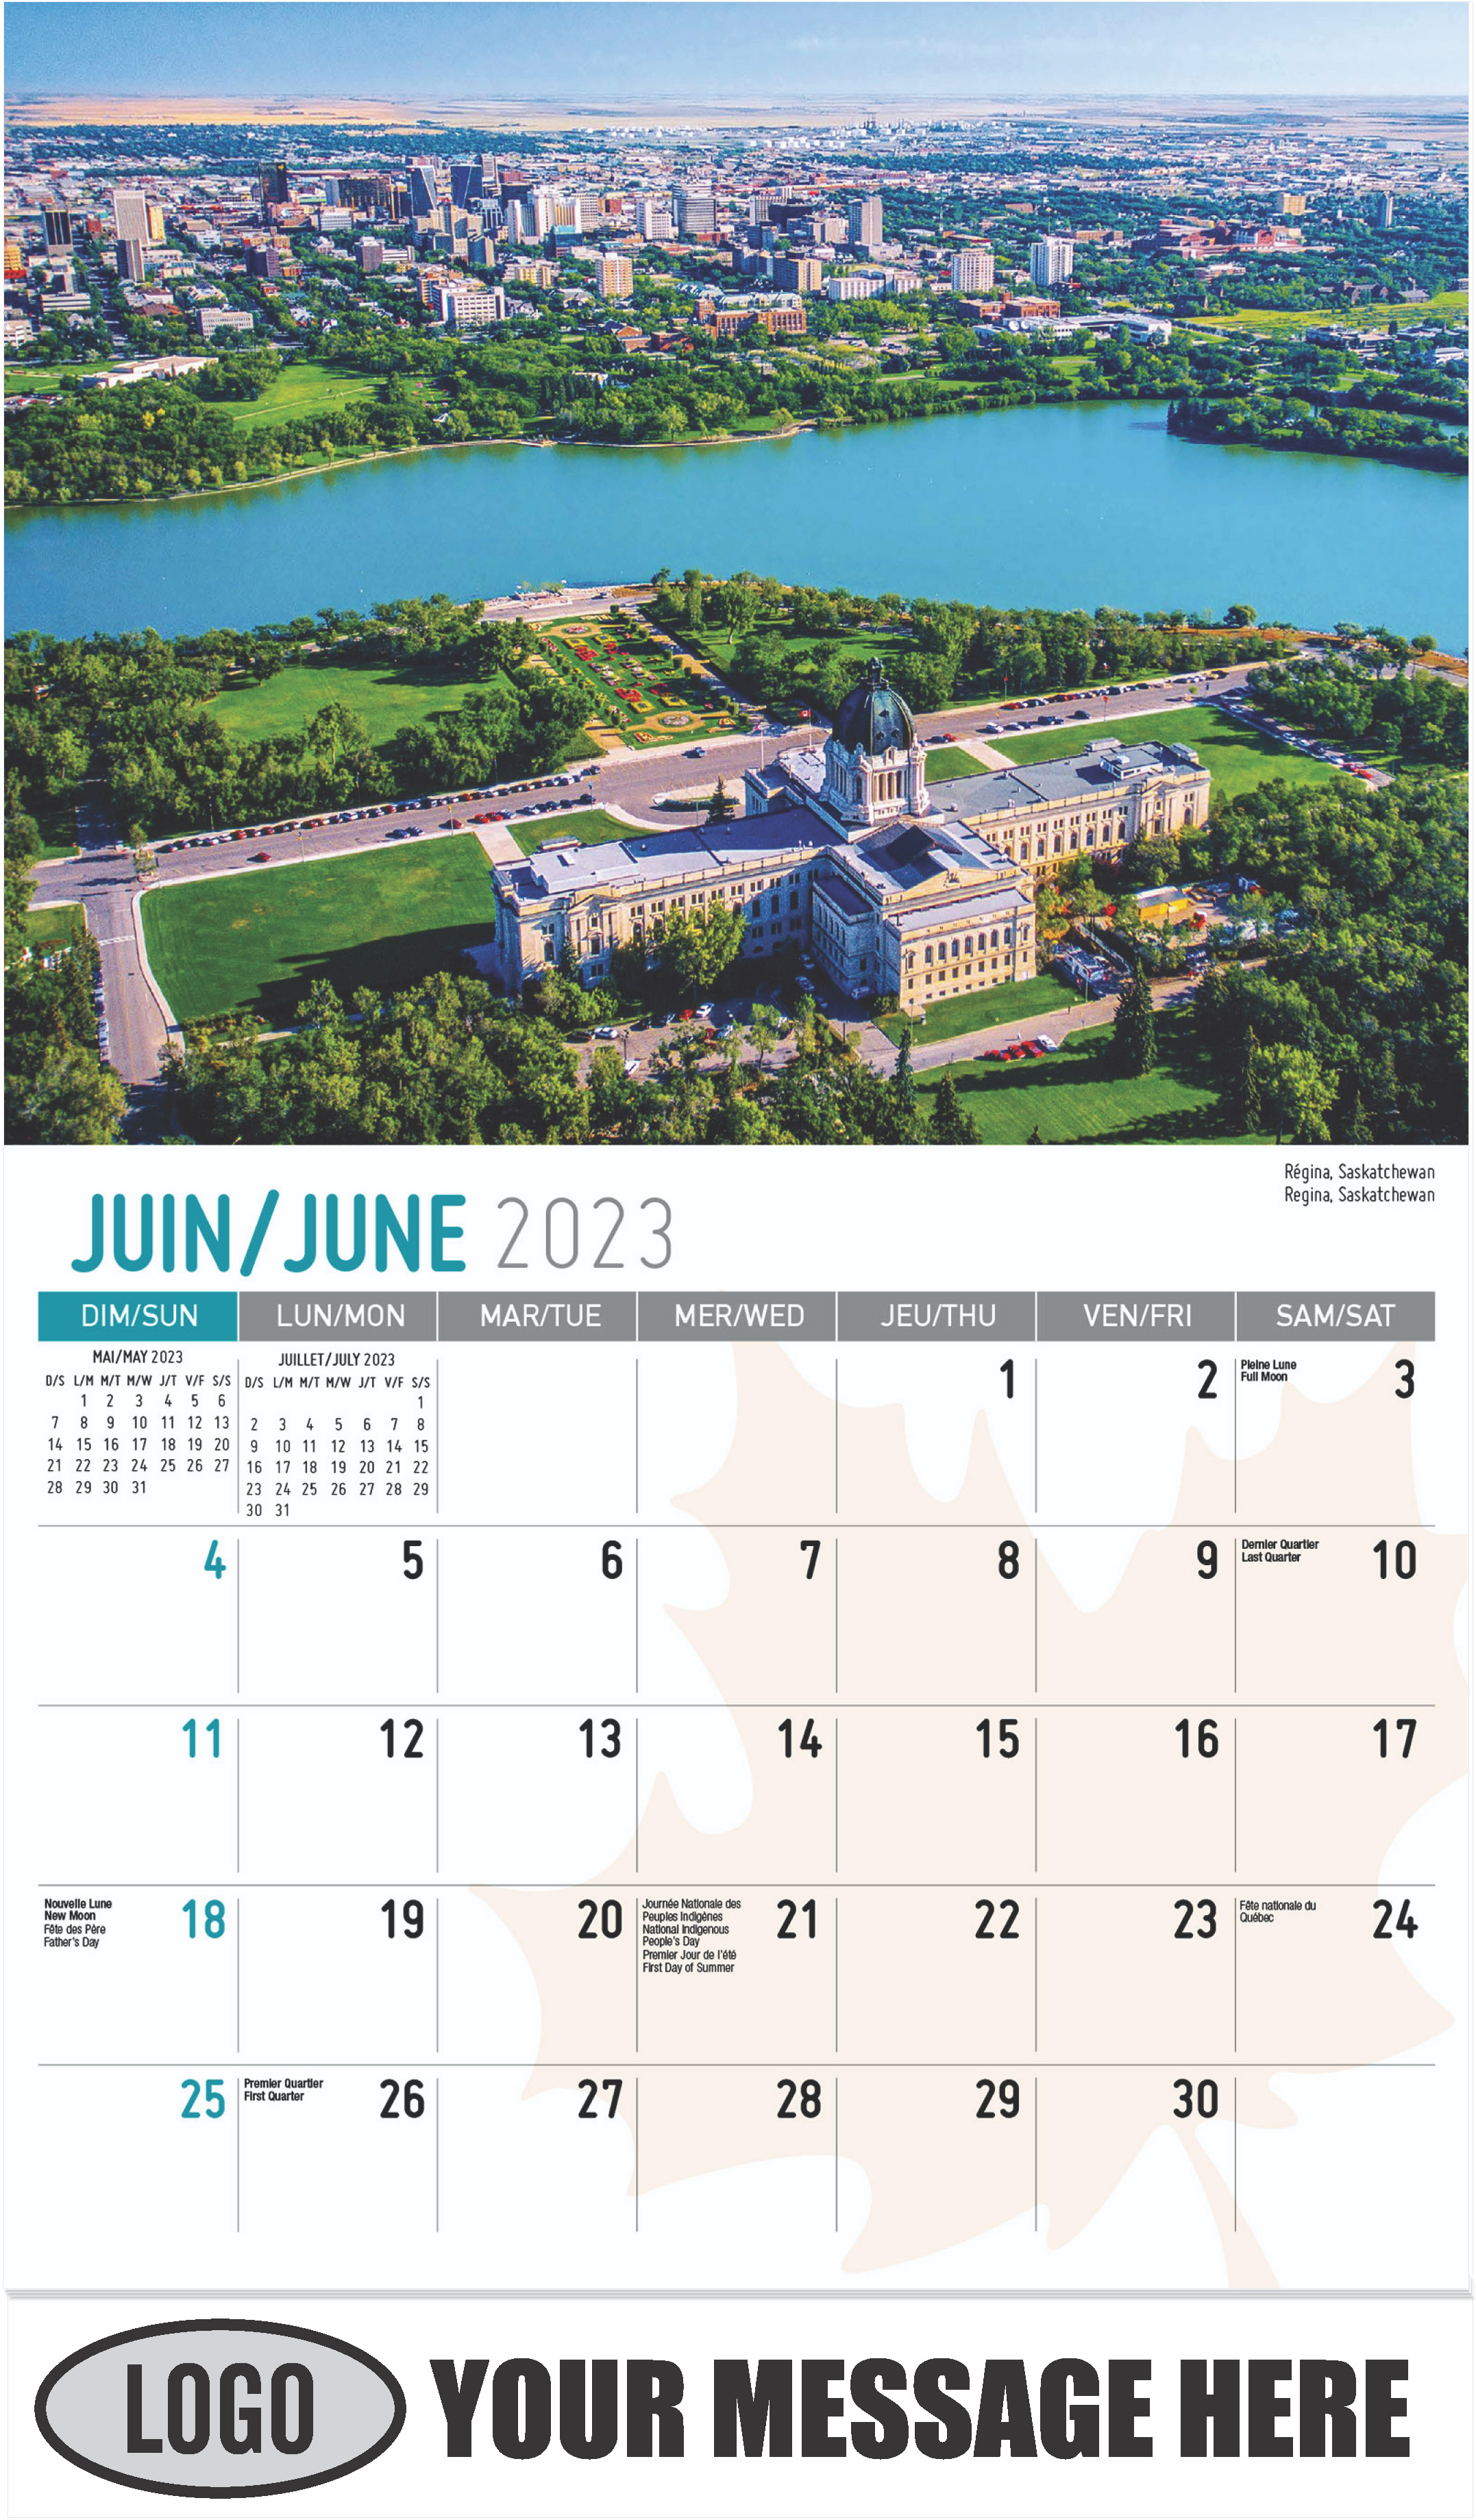 Regina, Saskatchewan - June - Scenes of Canada(French-English bilingual) 2023 Promotional Calendar